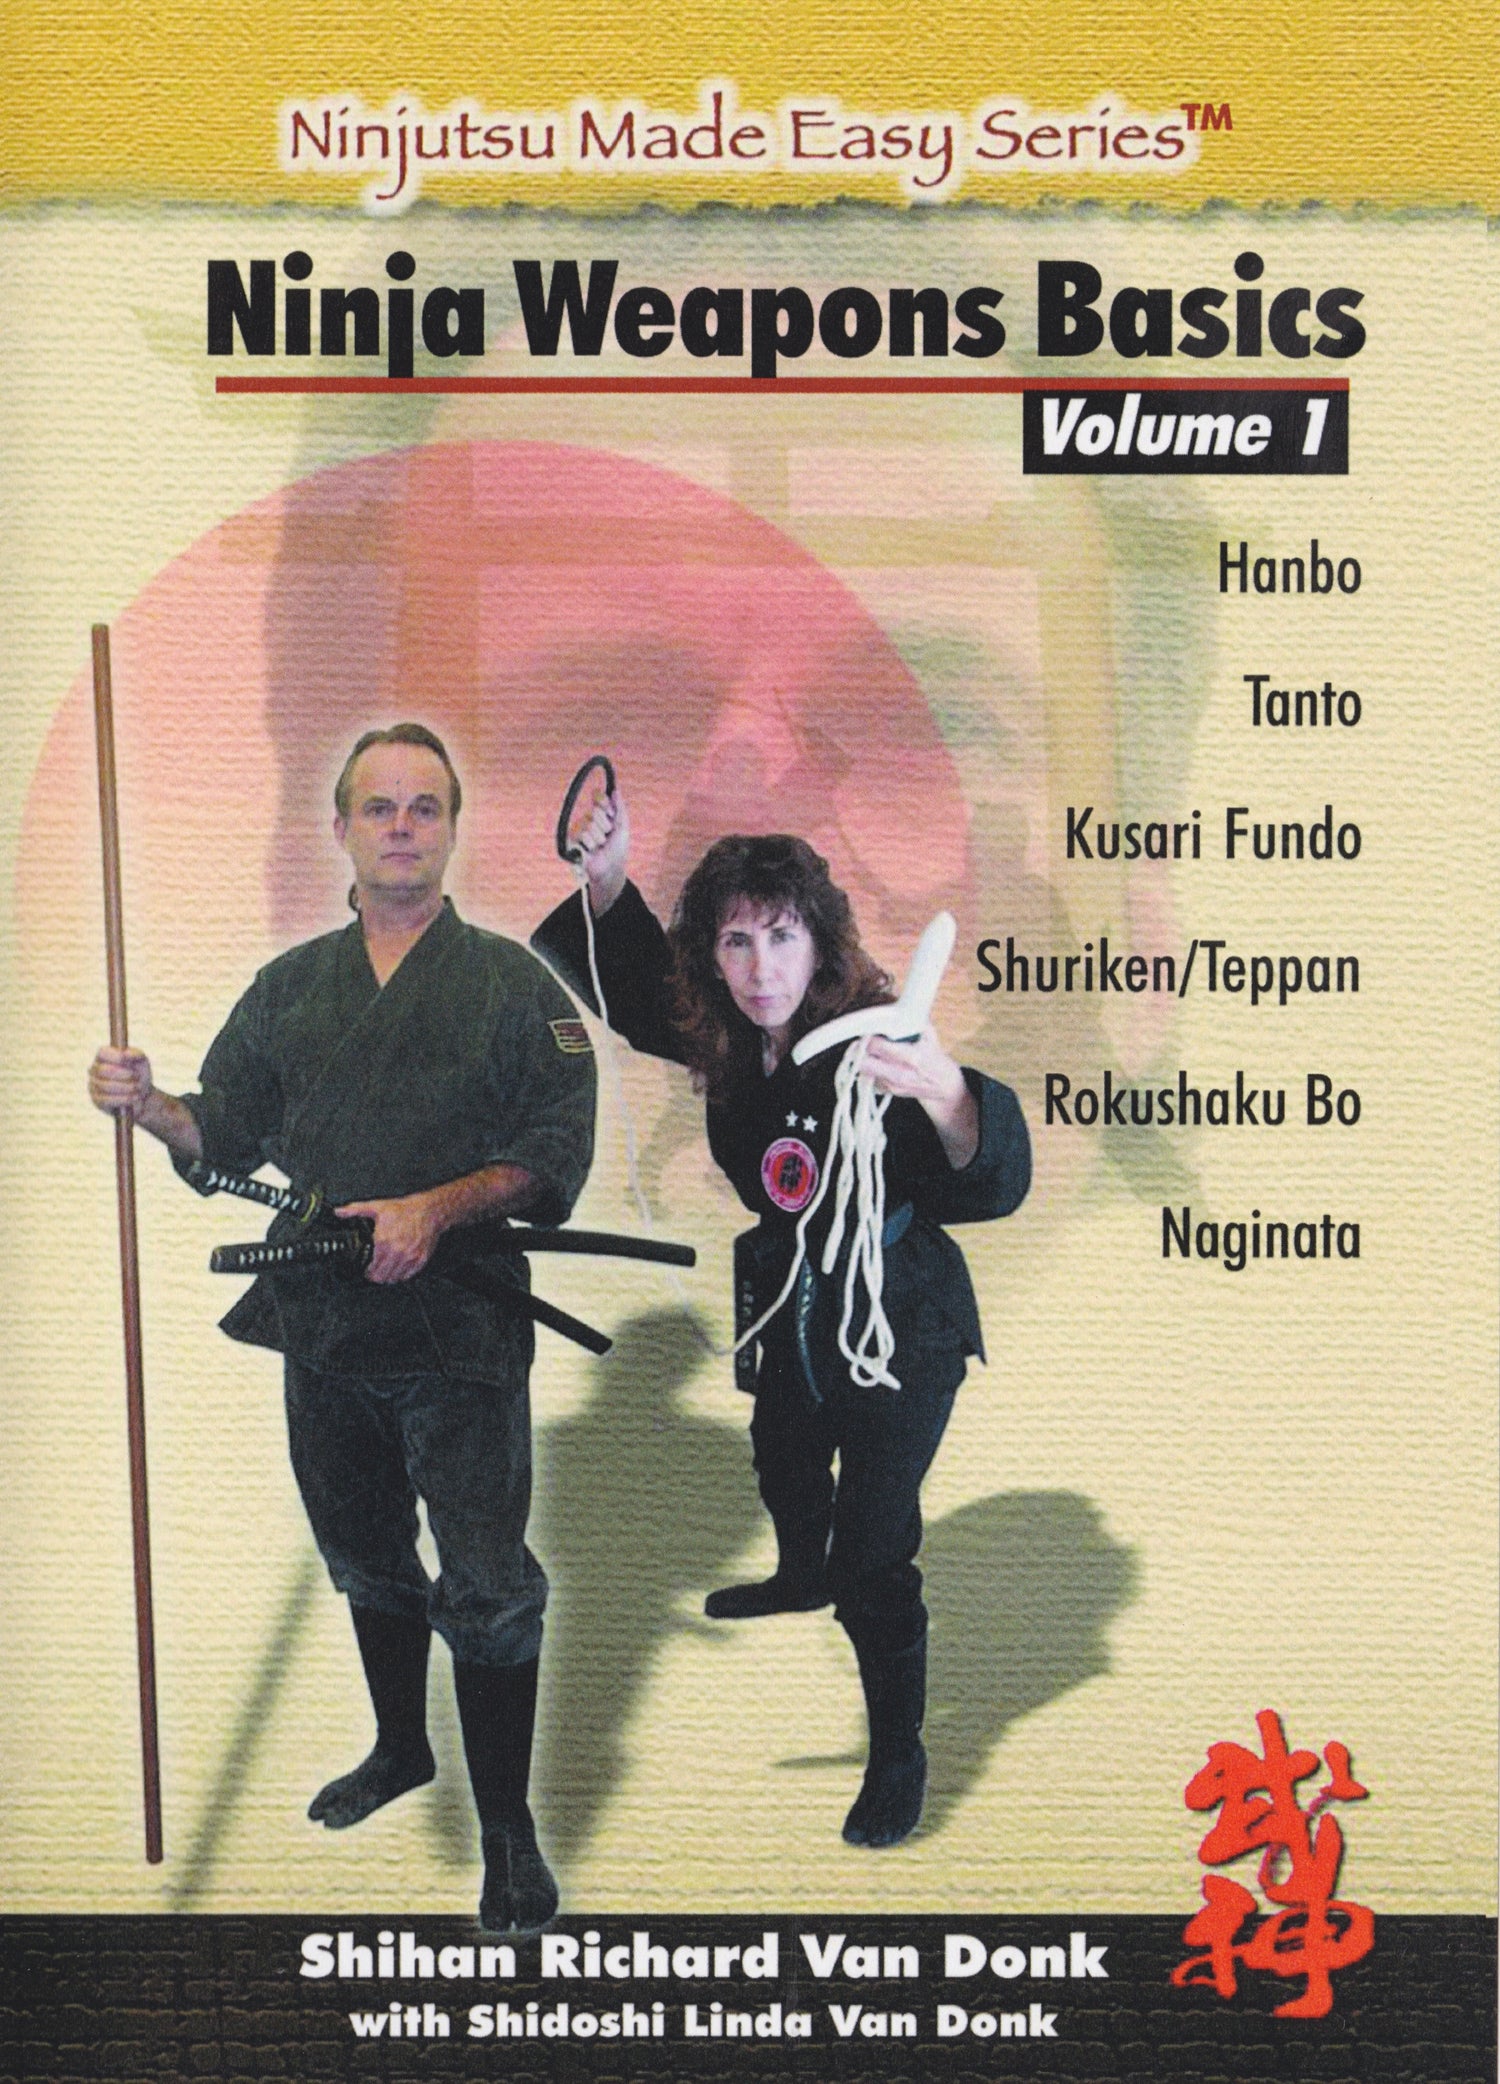 Ninja Weapons DVD 1 by Richard Van Donk